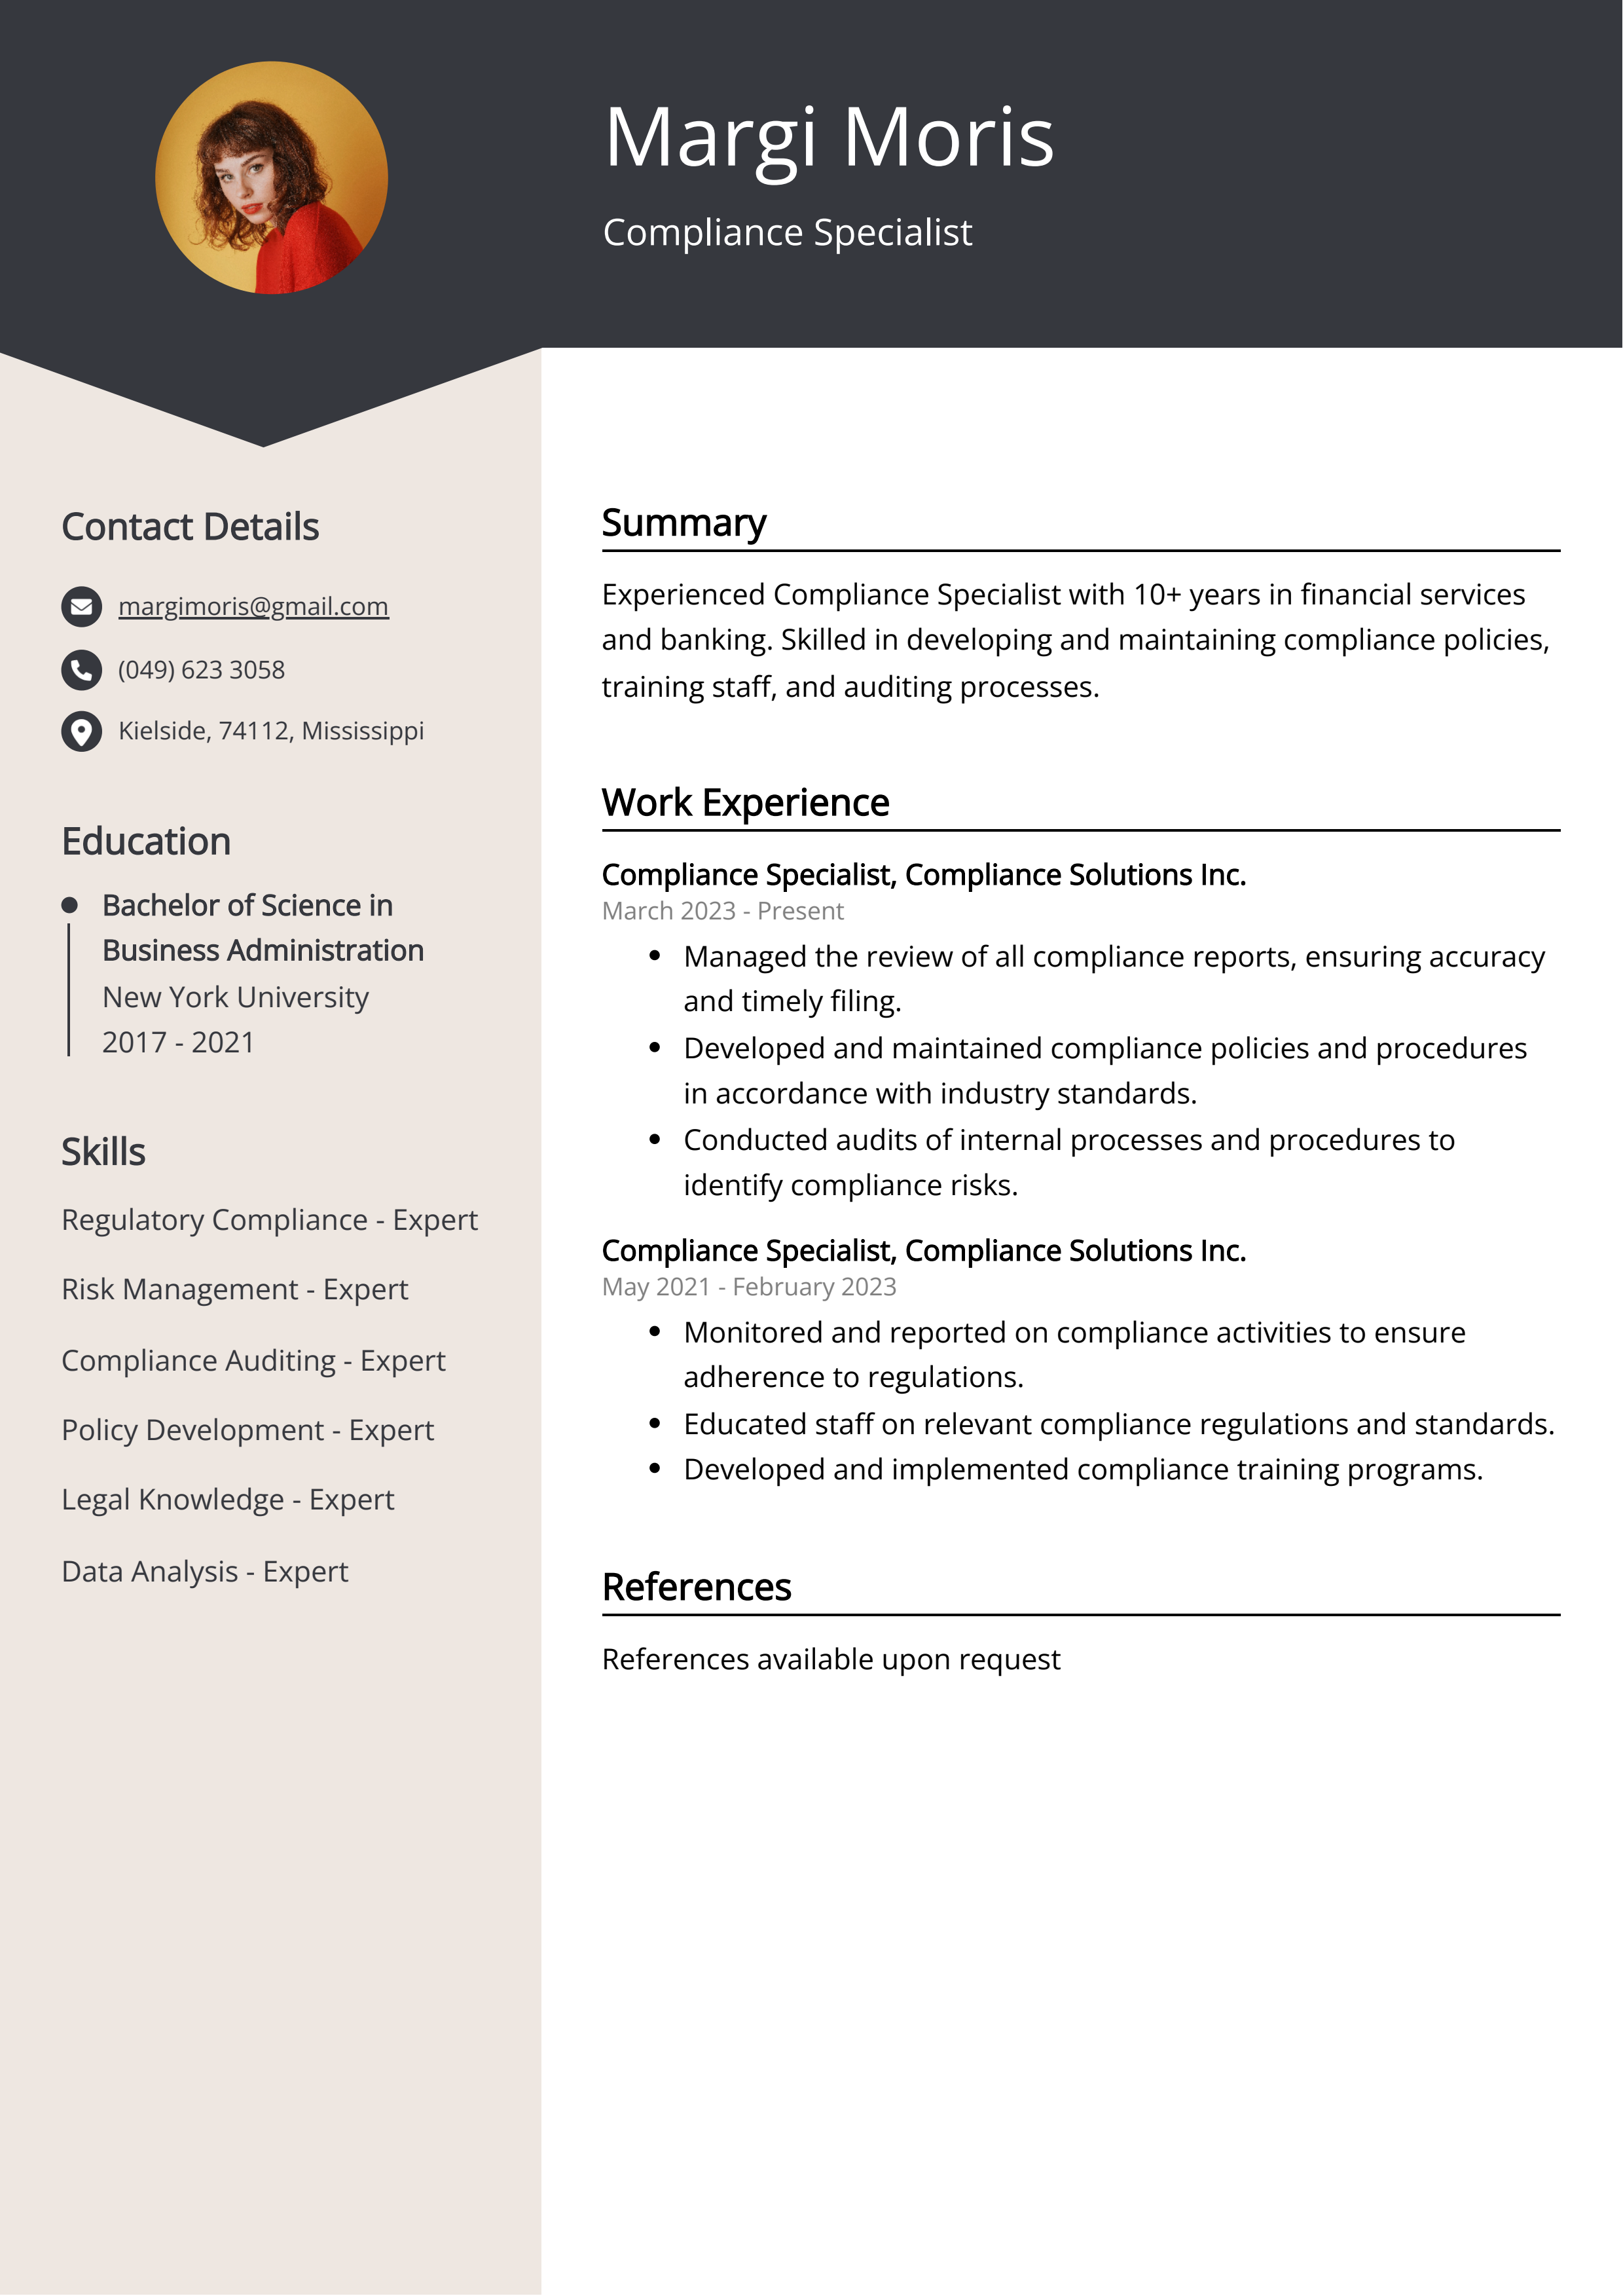 Compliance Specialist CV Example